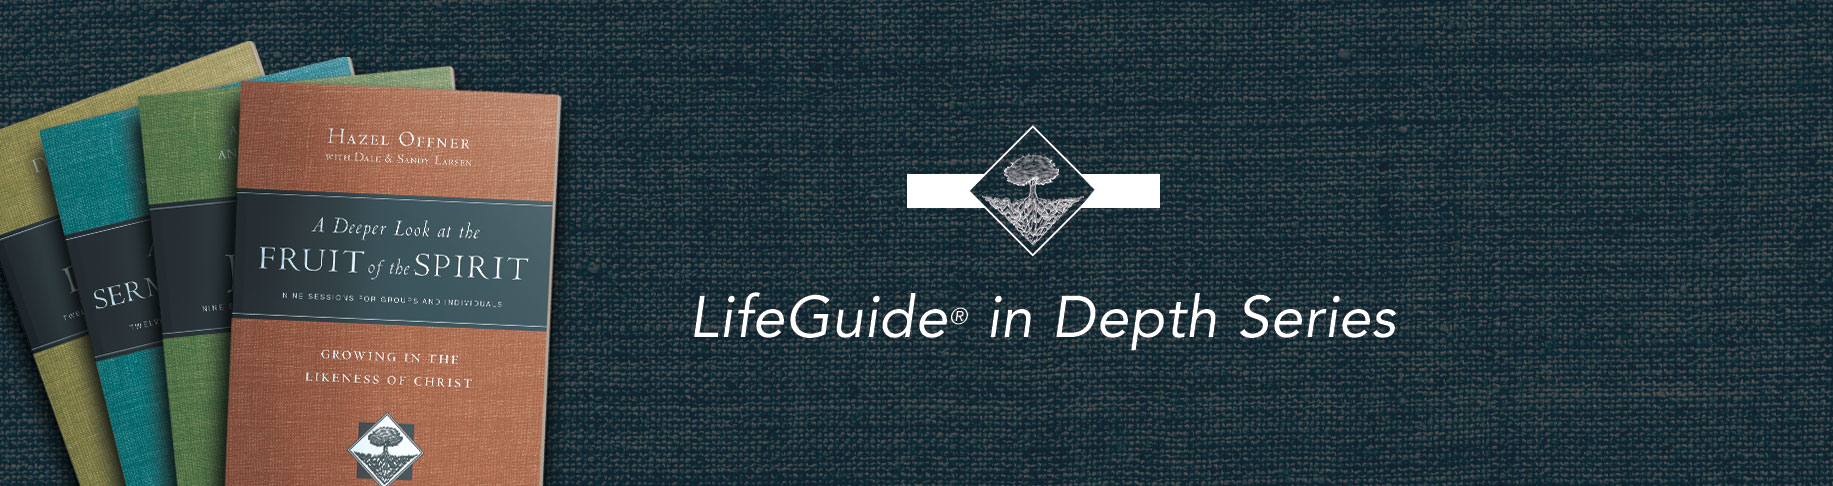 LifeGuide in Depth Series